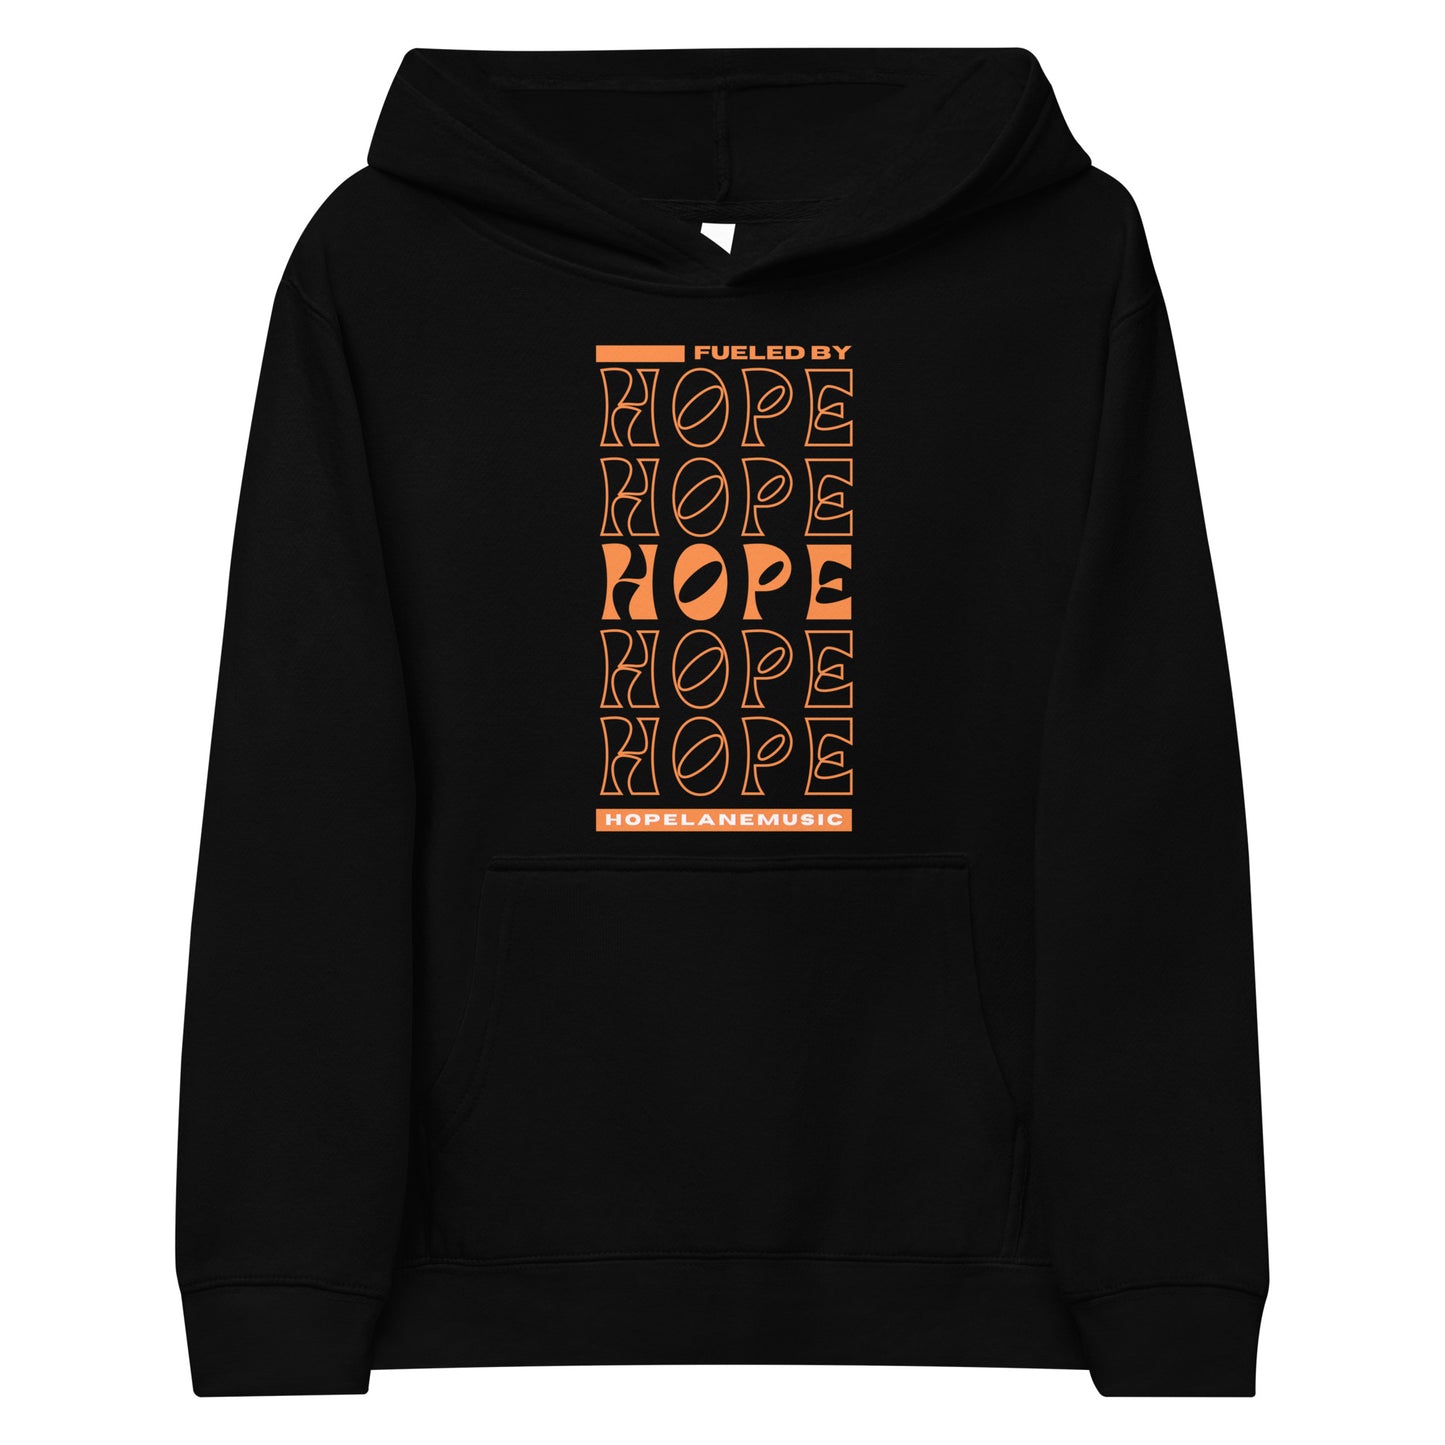 'Fueled by Hope' (retro edition) Kids fleece hoodie